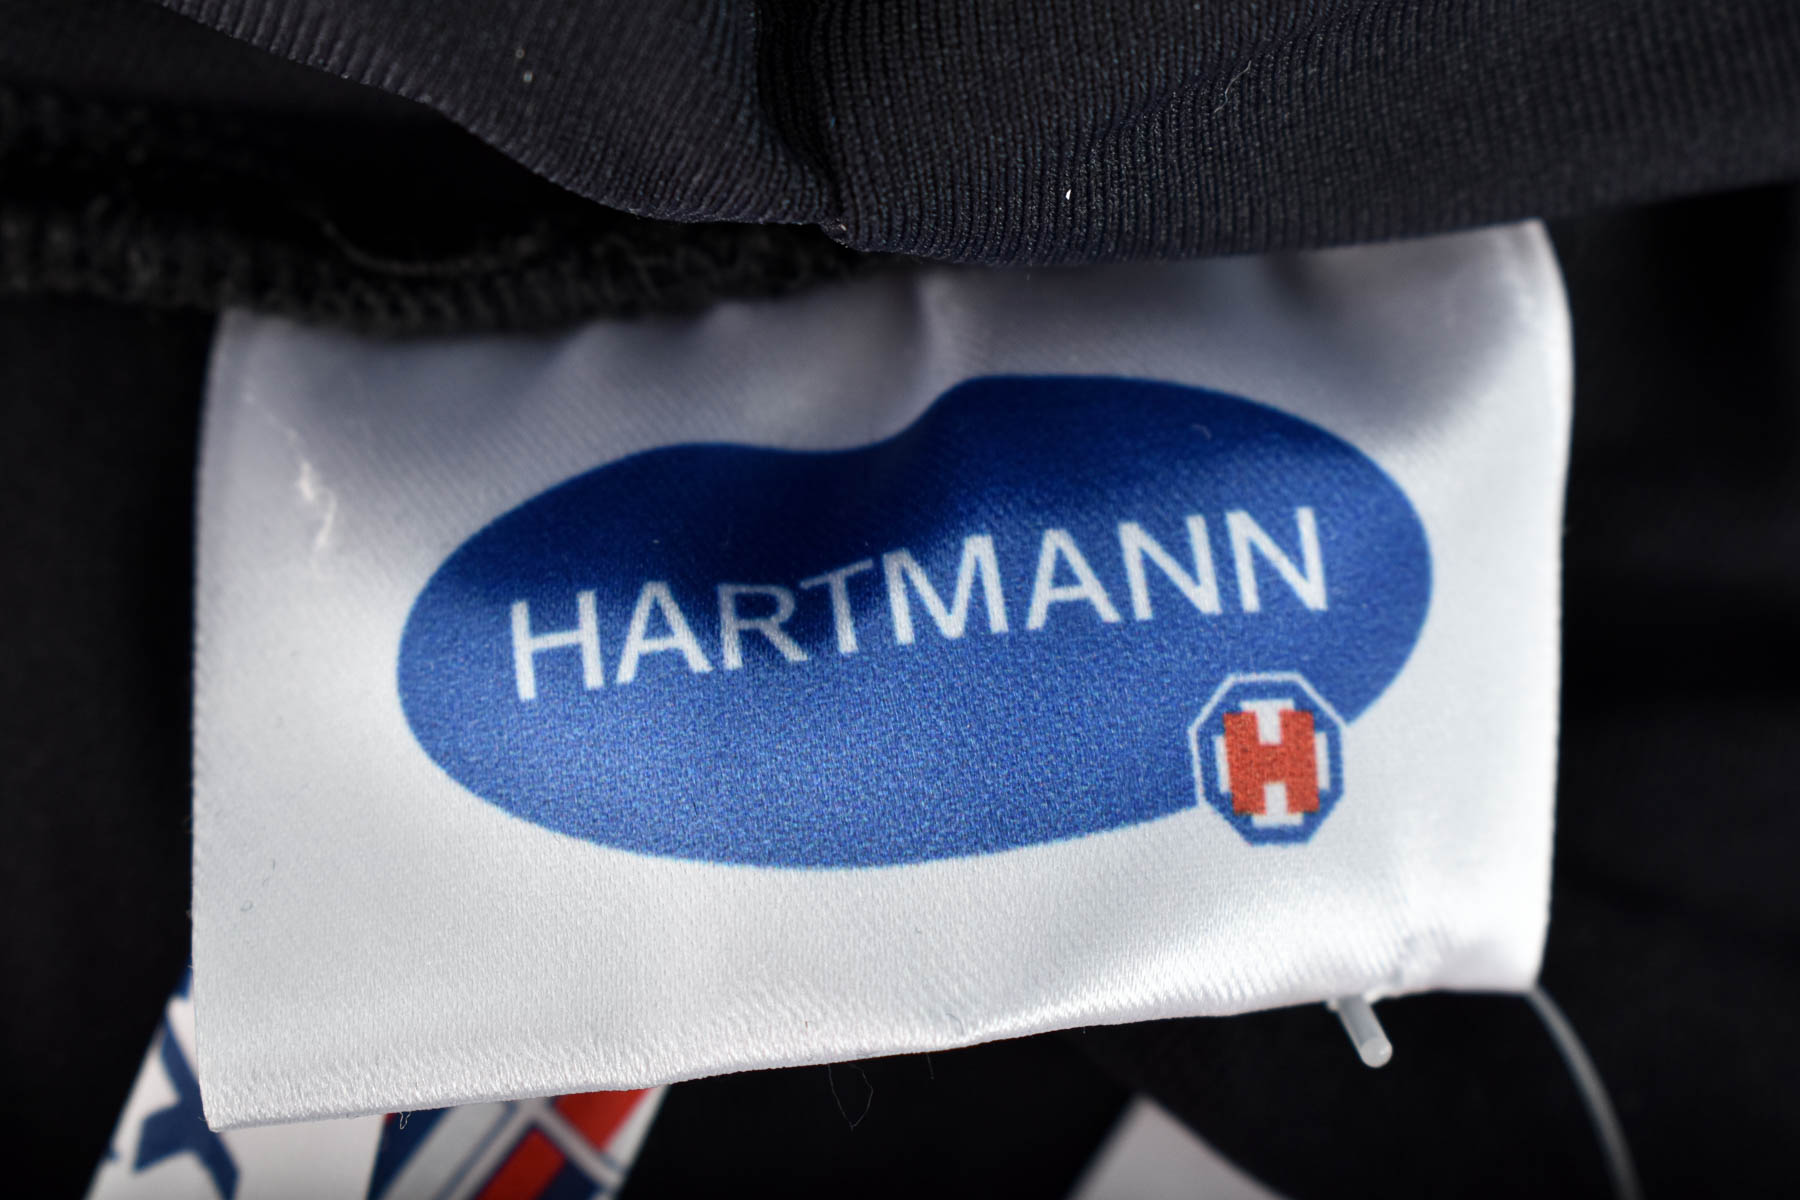 Female shorts - Hartmann - 2